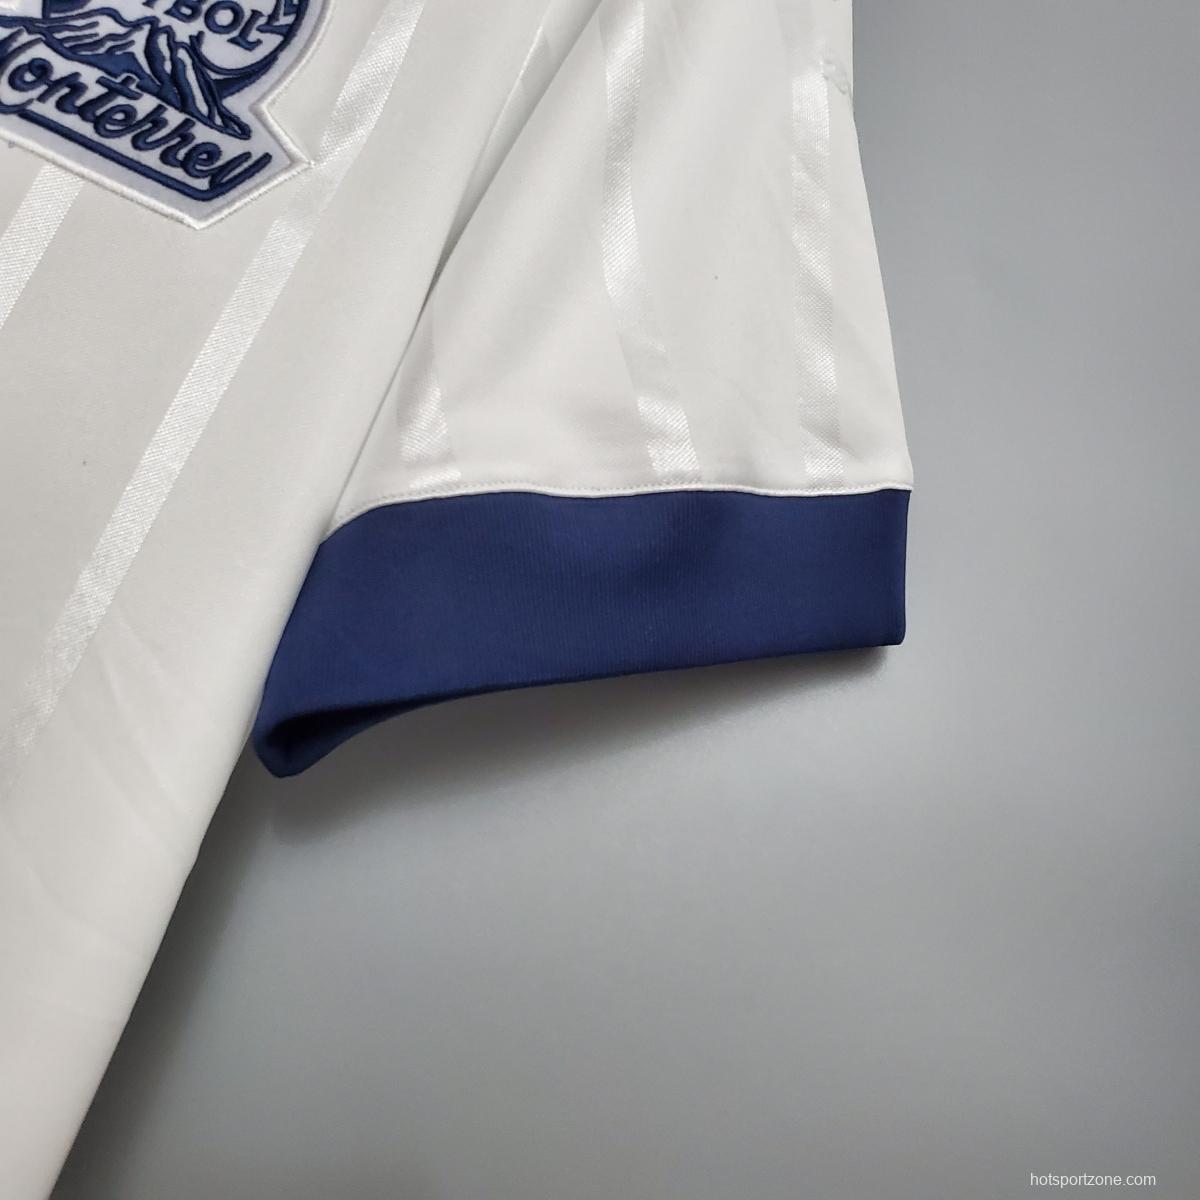 Monterrey 75th Anniversary Edition White Soccer Jersey